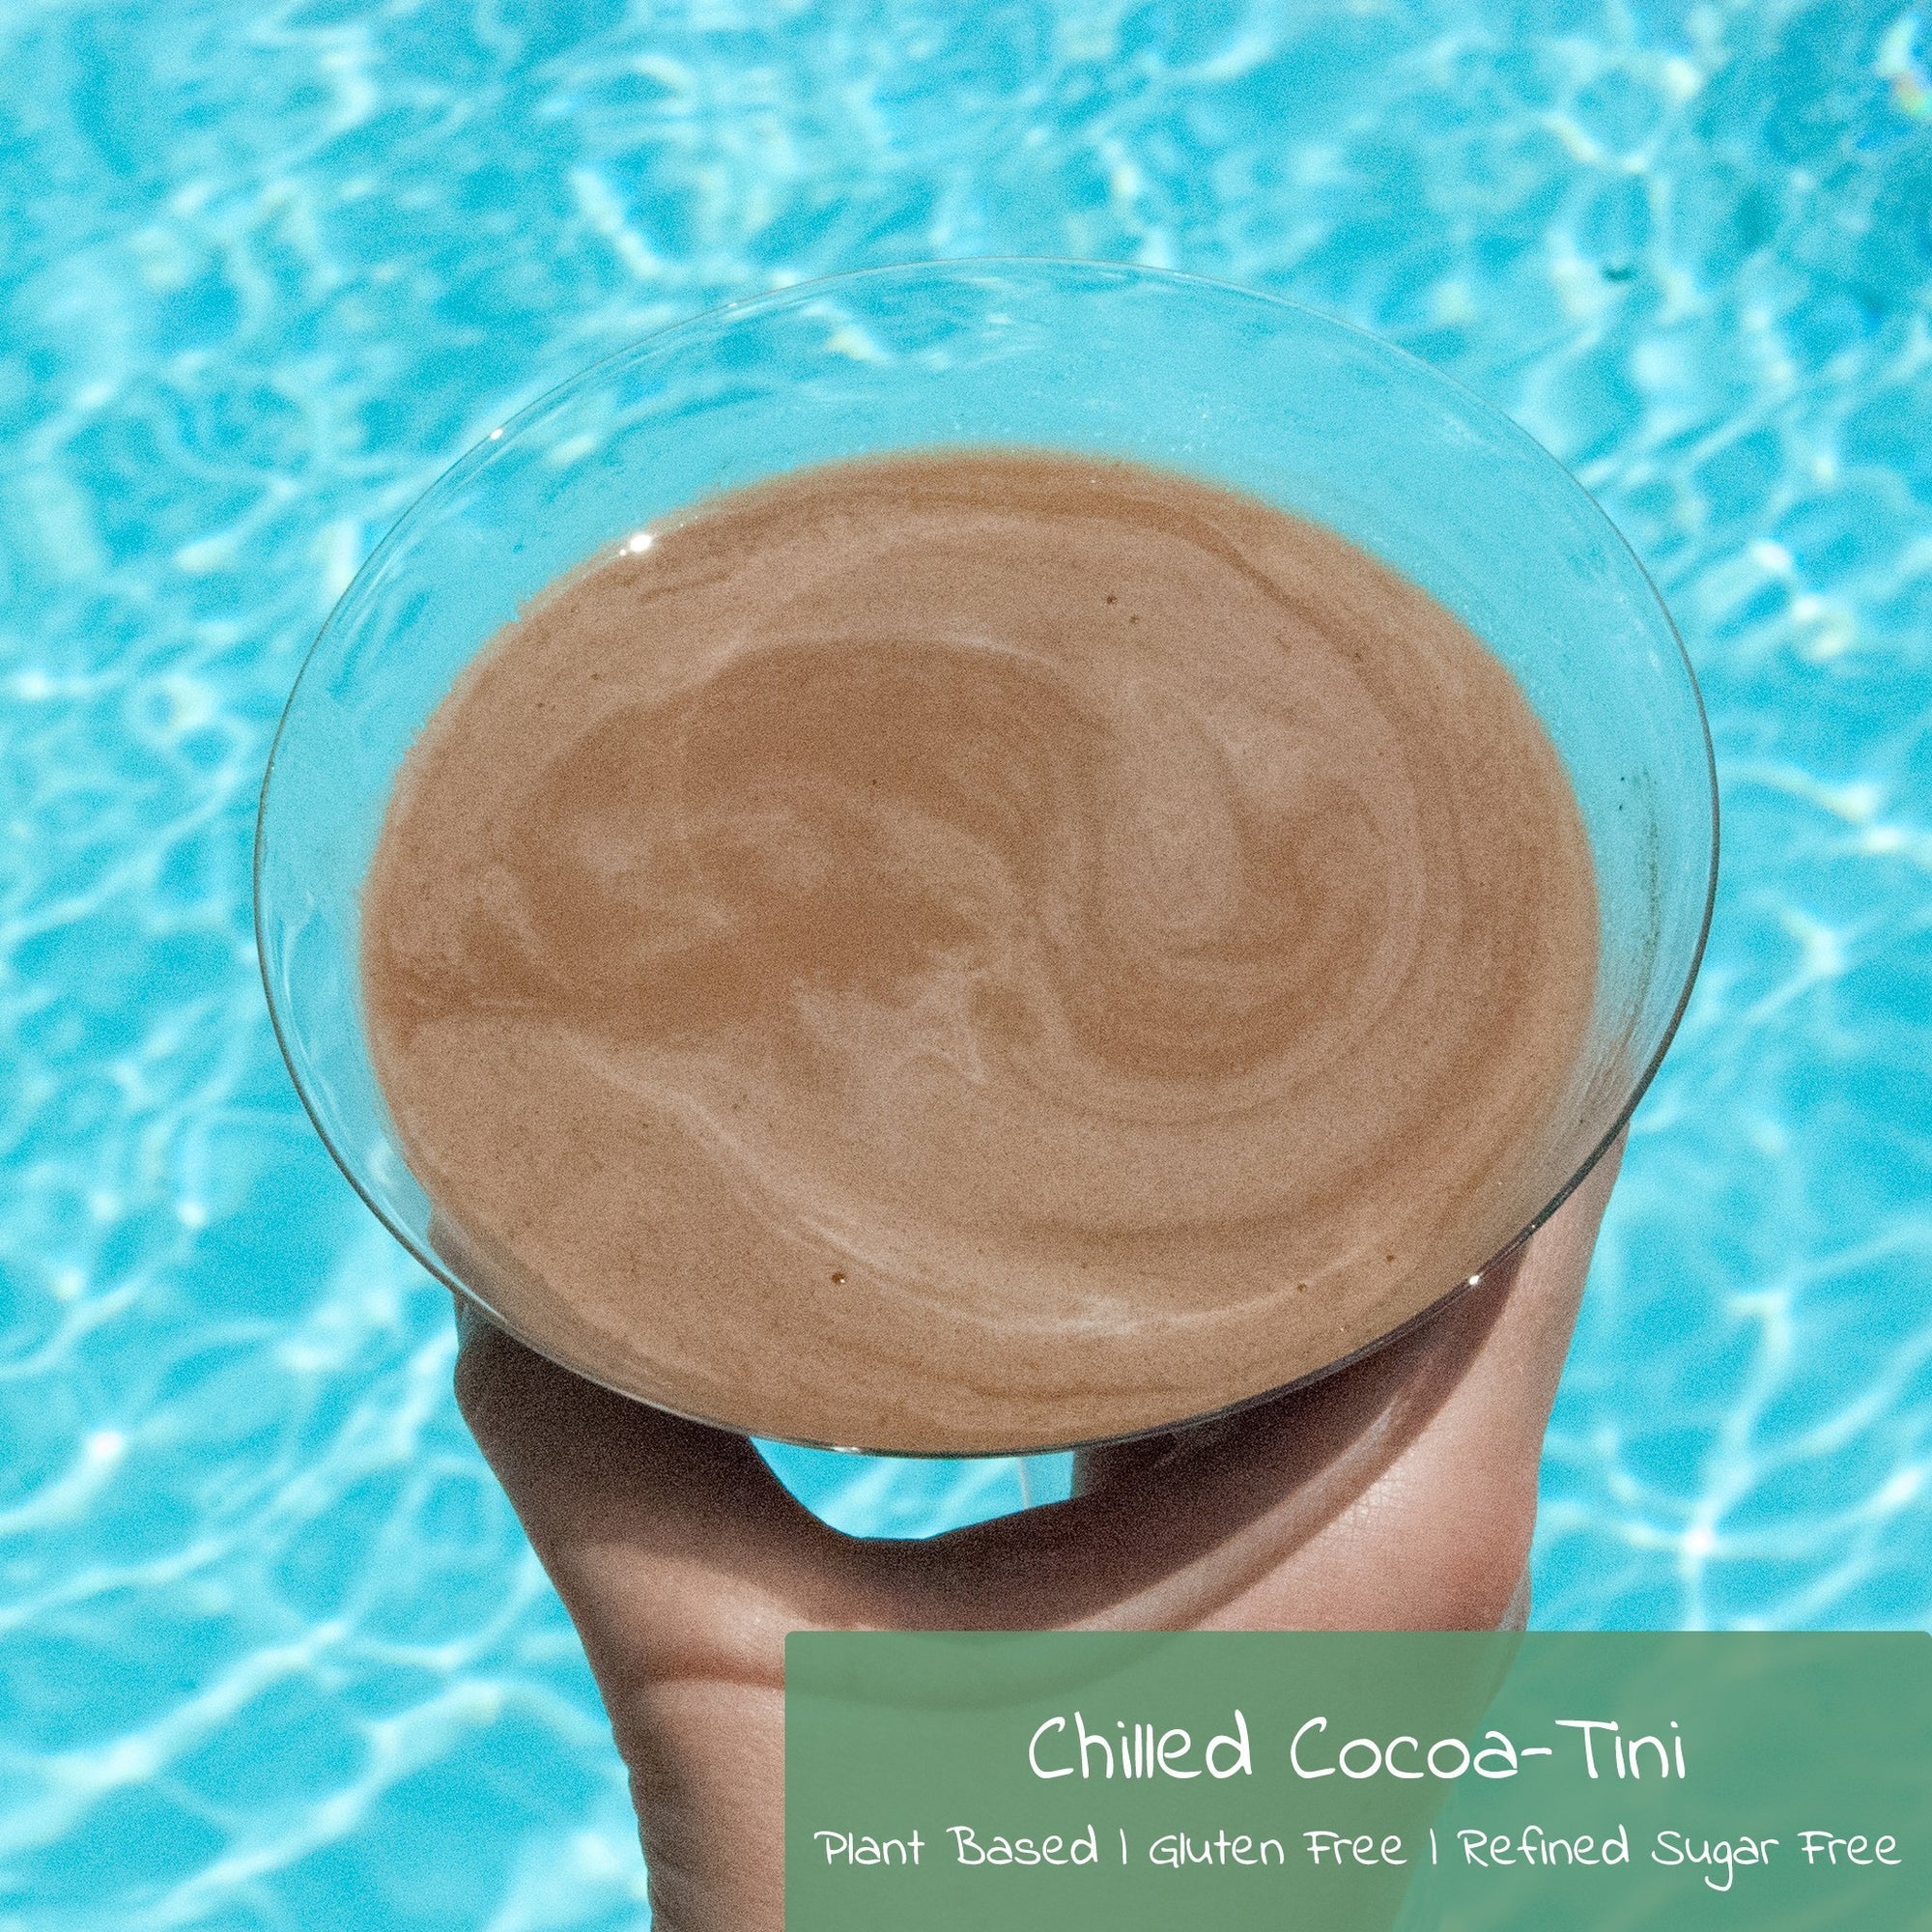 Chilled Cocoa-Tini